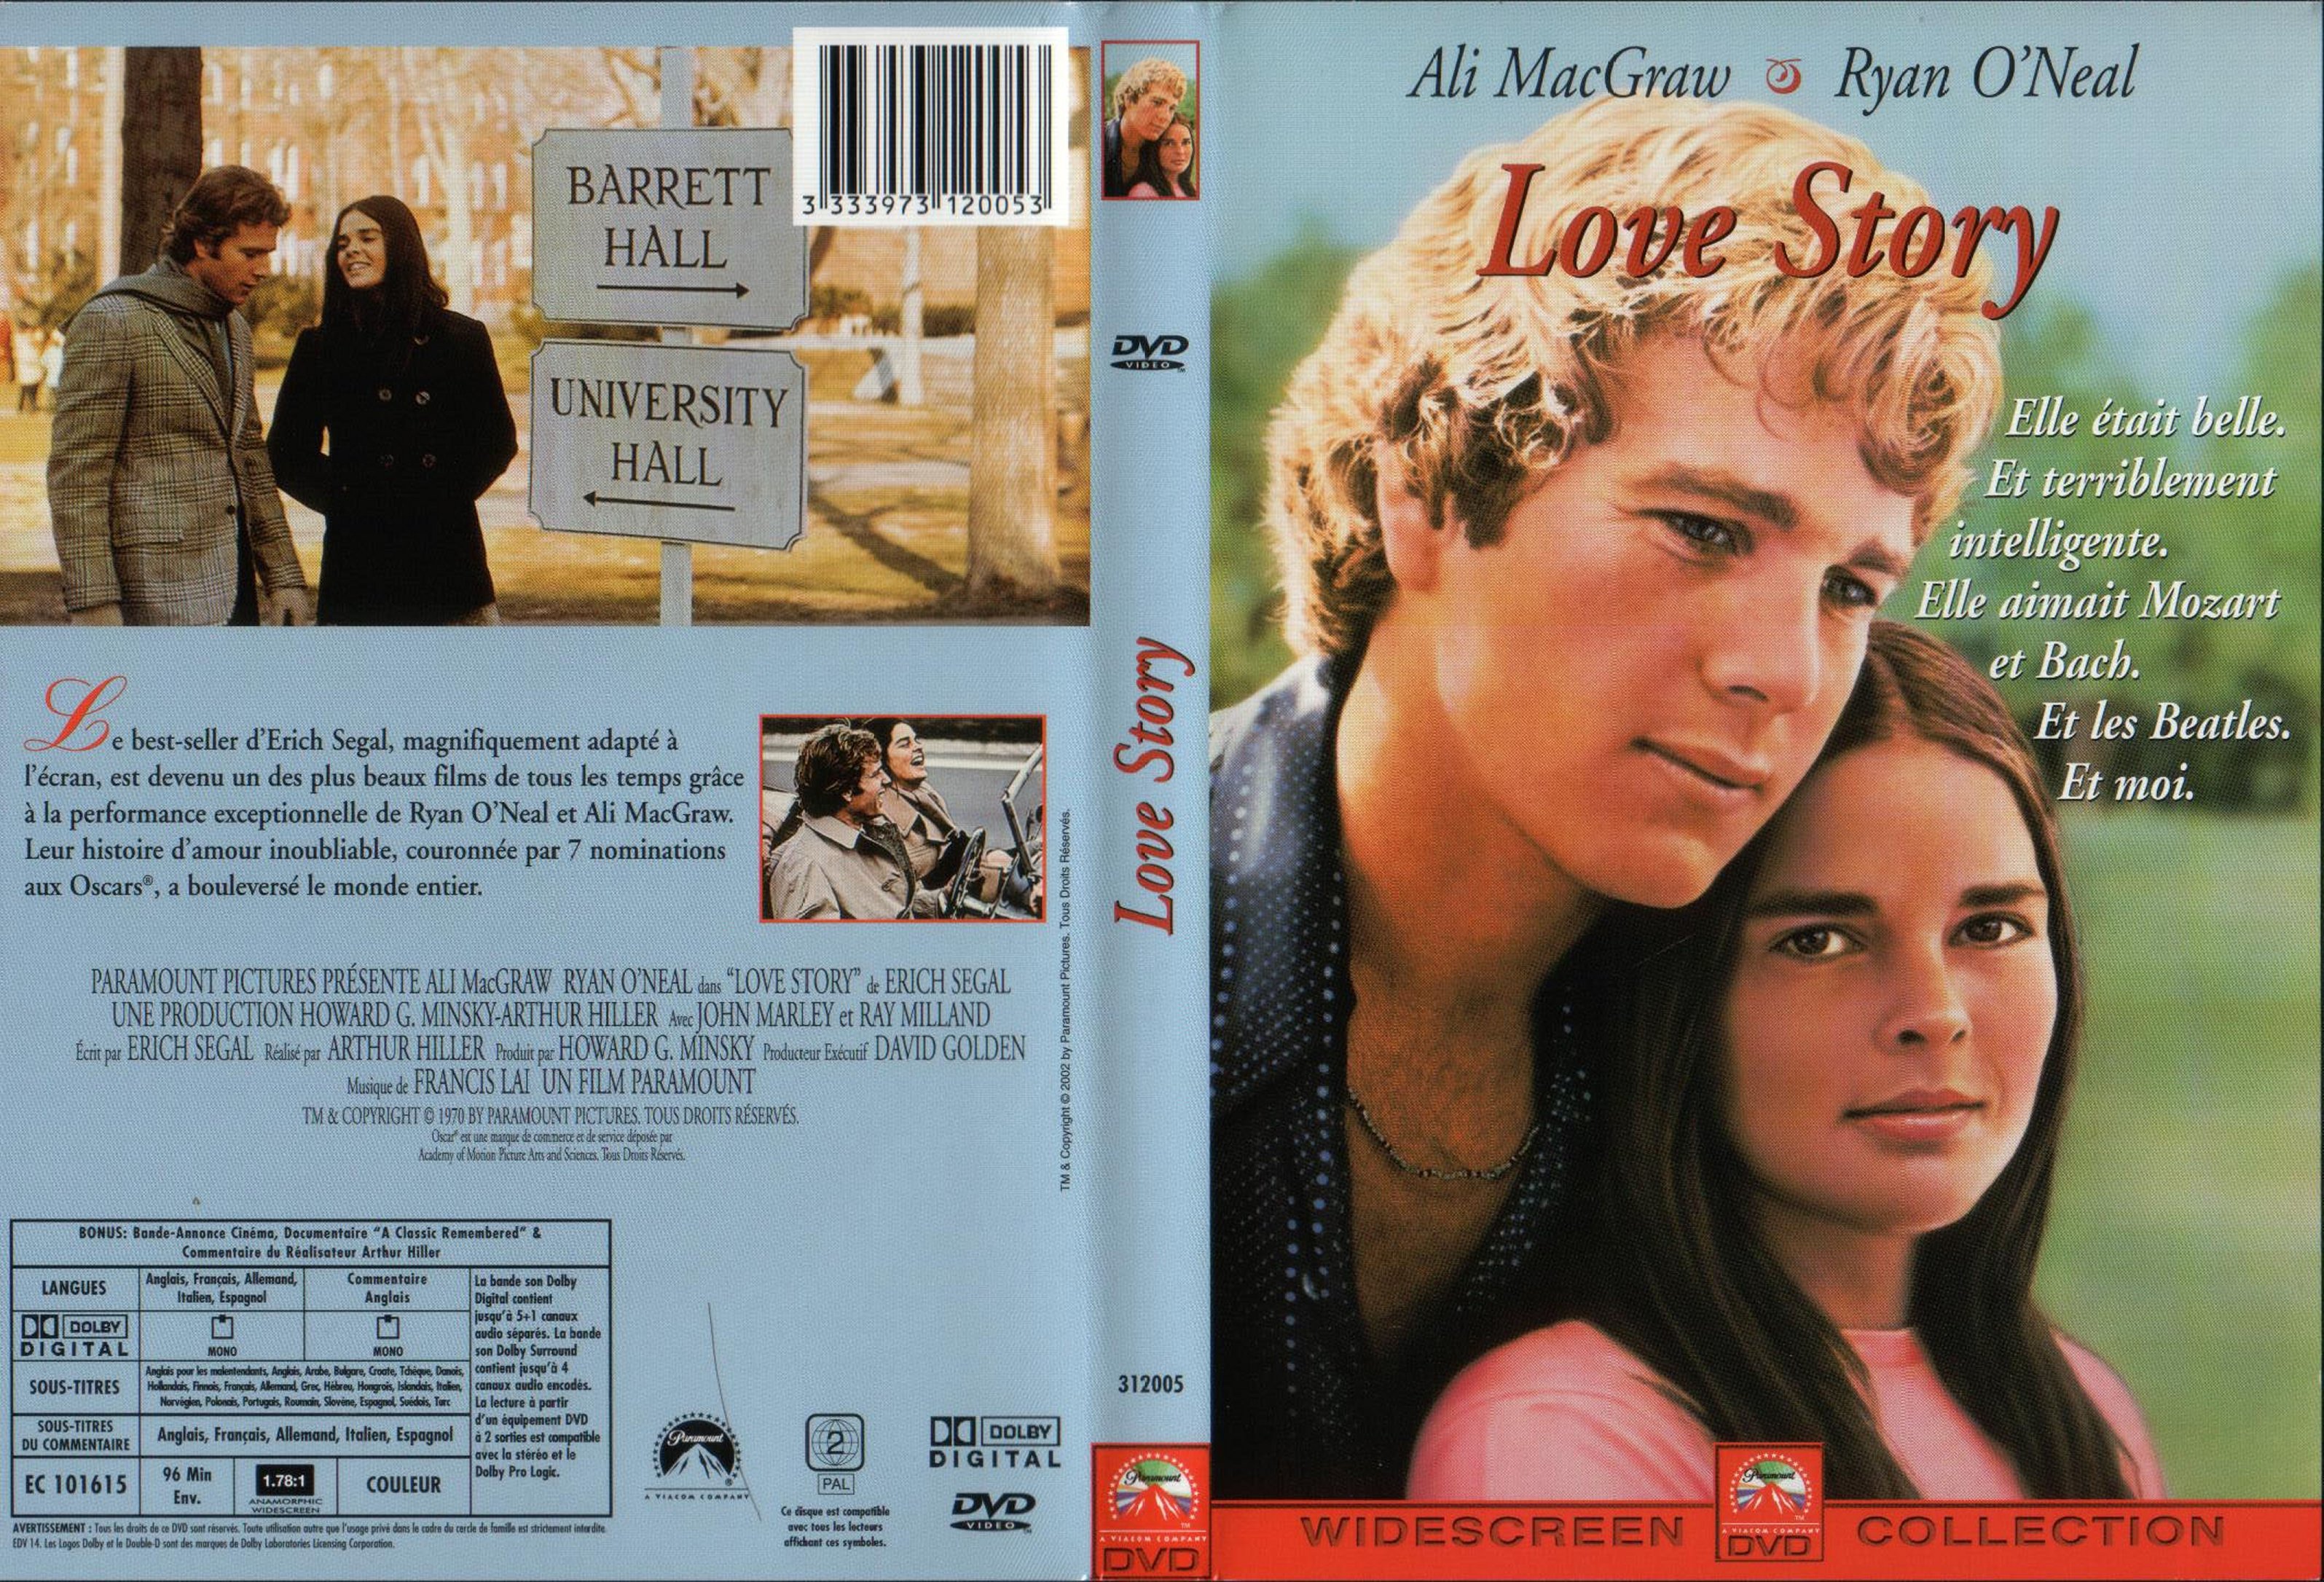 Jaquette DVD Love story v2